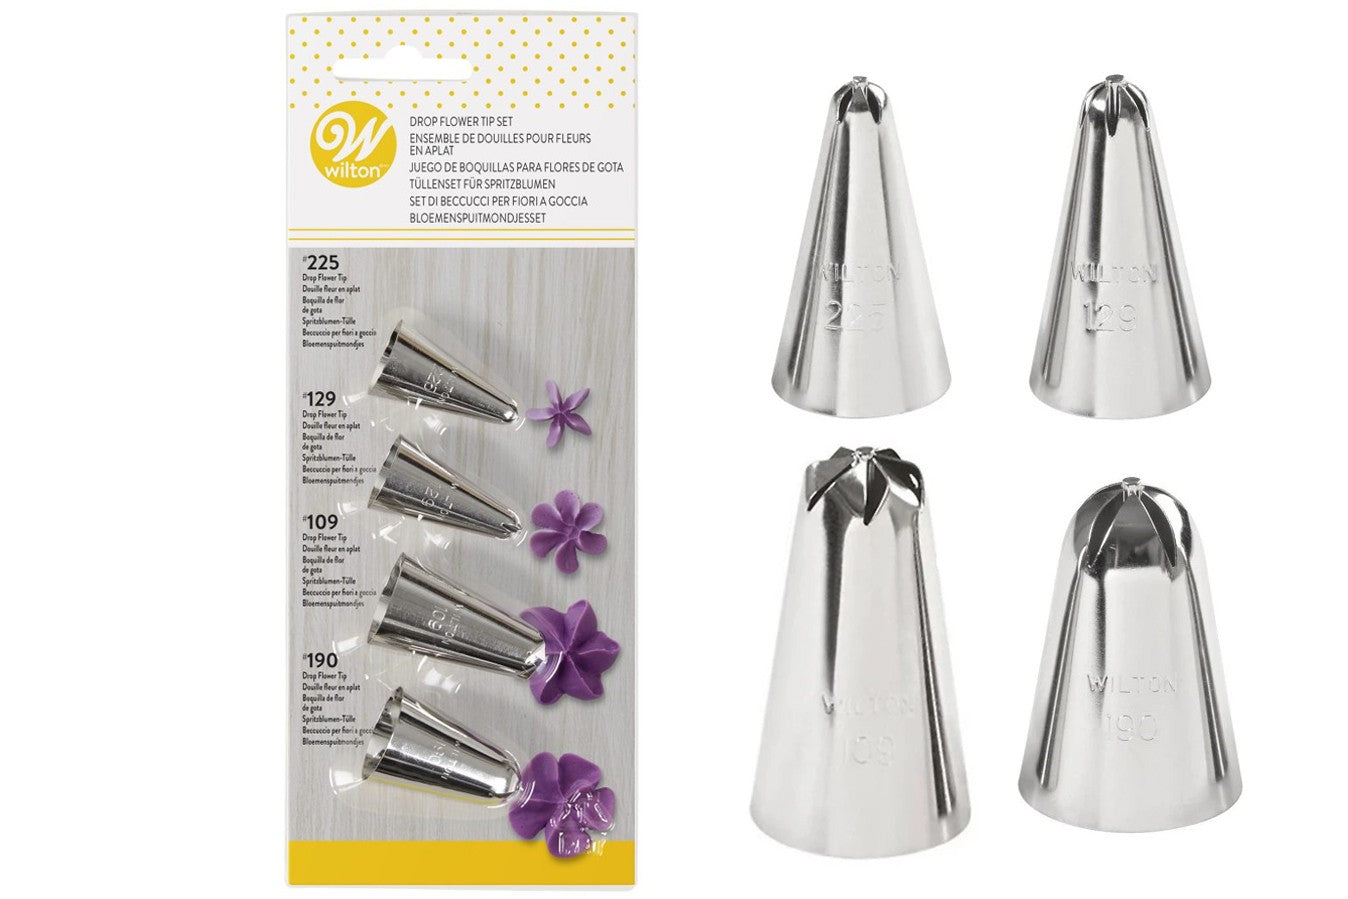 Wilton Drop Flower Piping Tip Set #225 #129 #109 #190 - The Cooks Cupboard Ltd